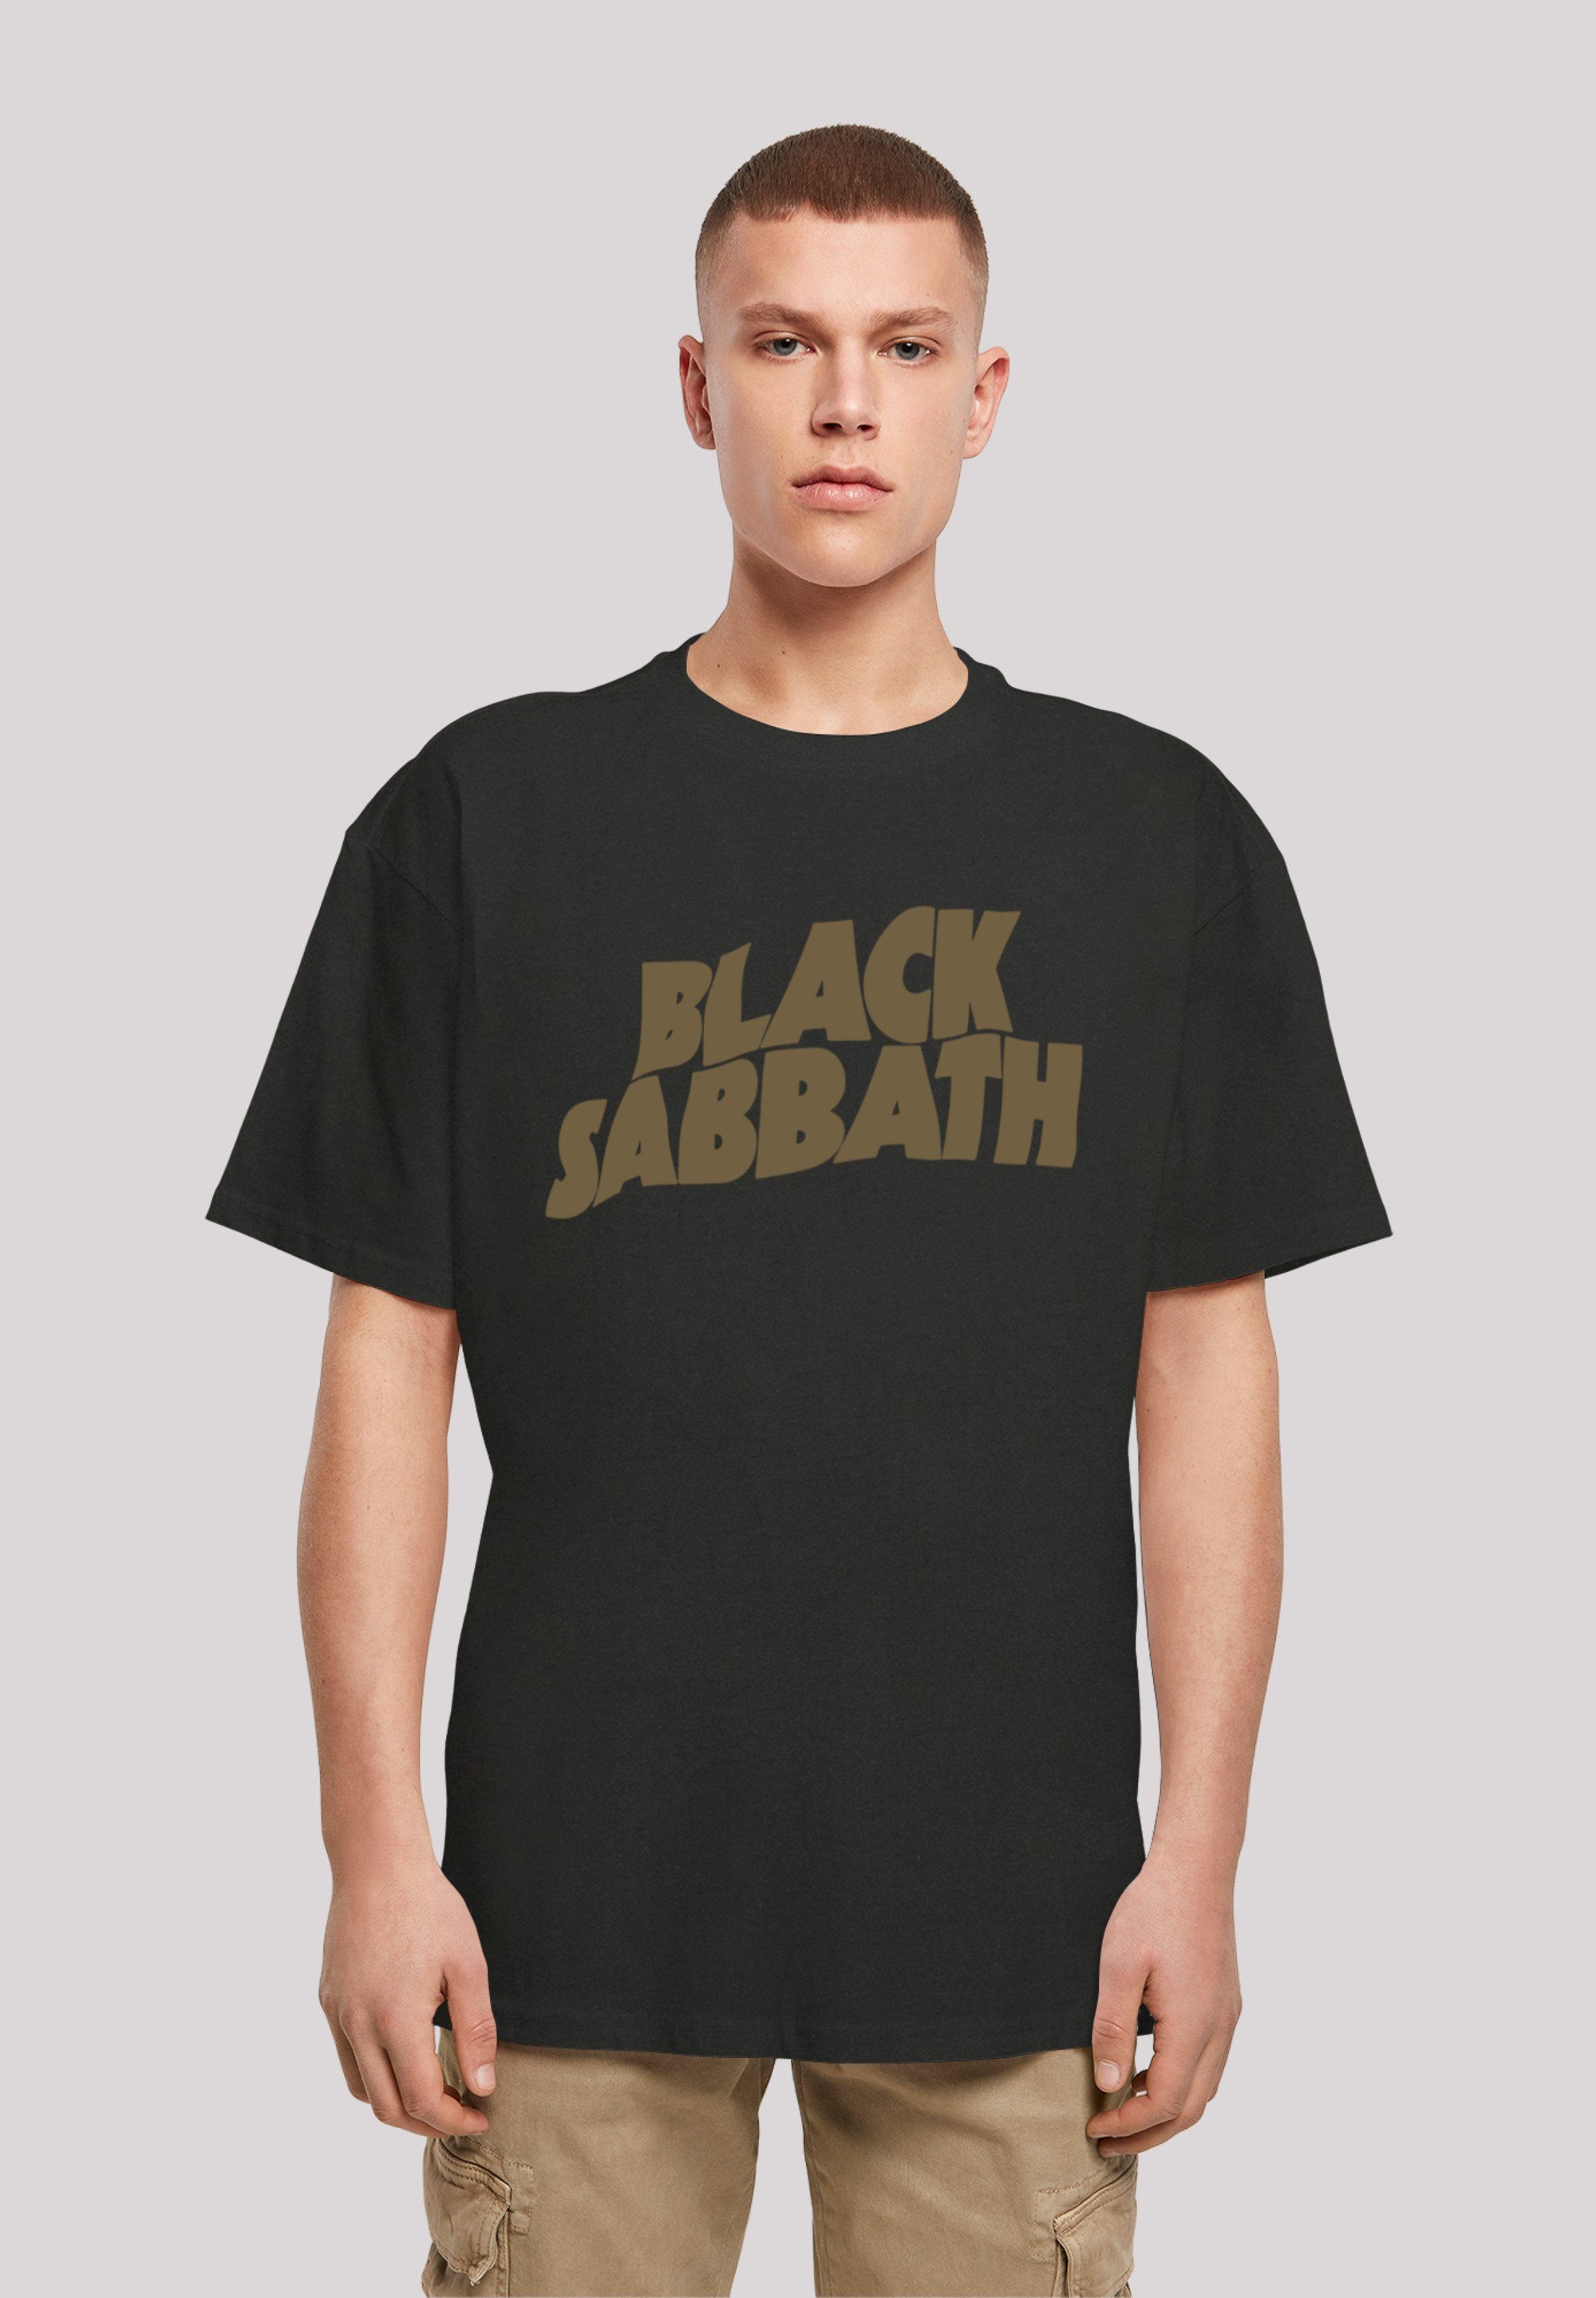 1978 Band Sabbath Black Zip Tour Metal T-Shirt F4NT4STIC Print Black US